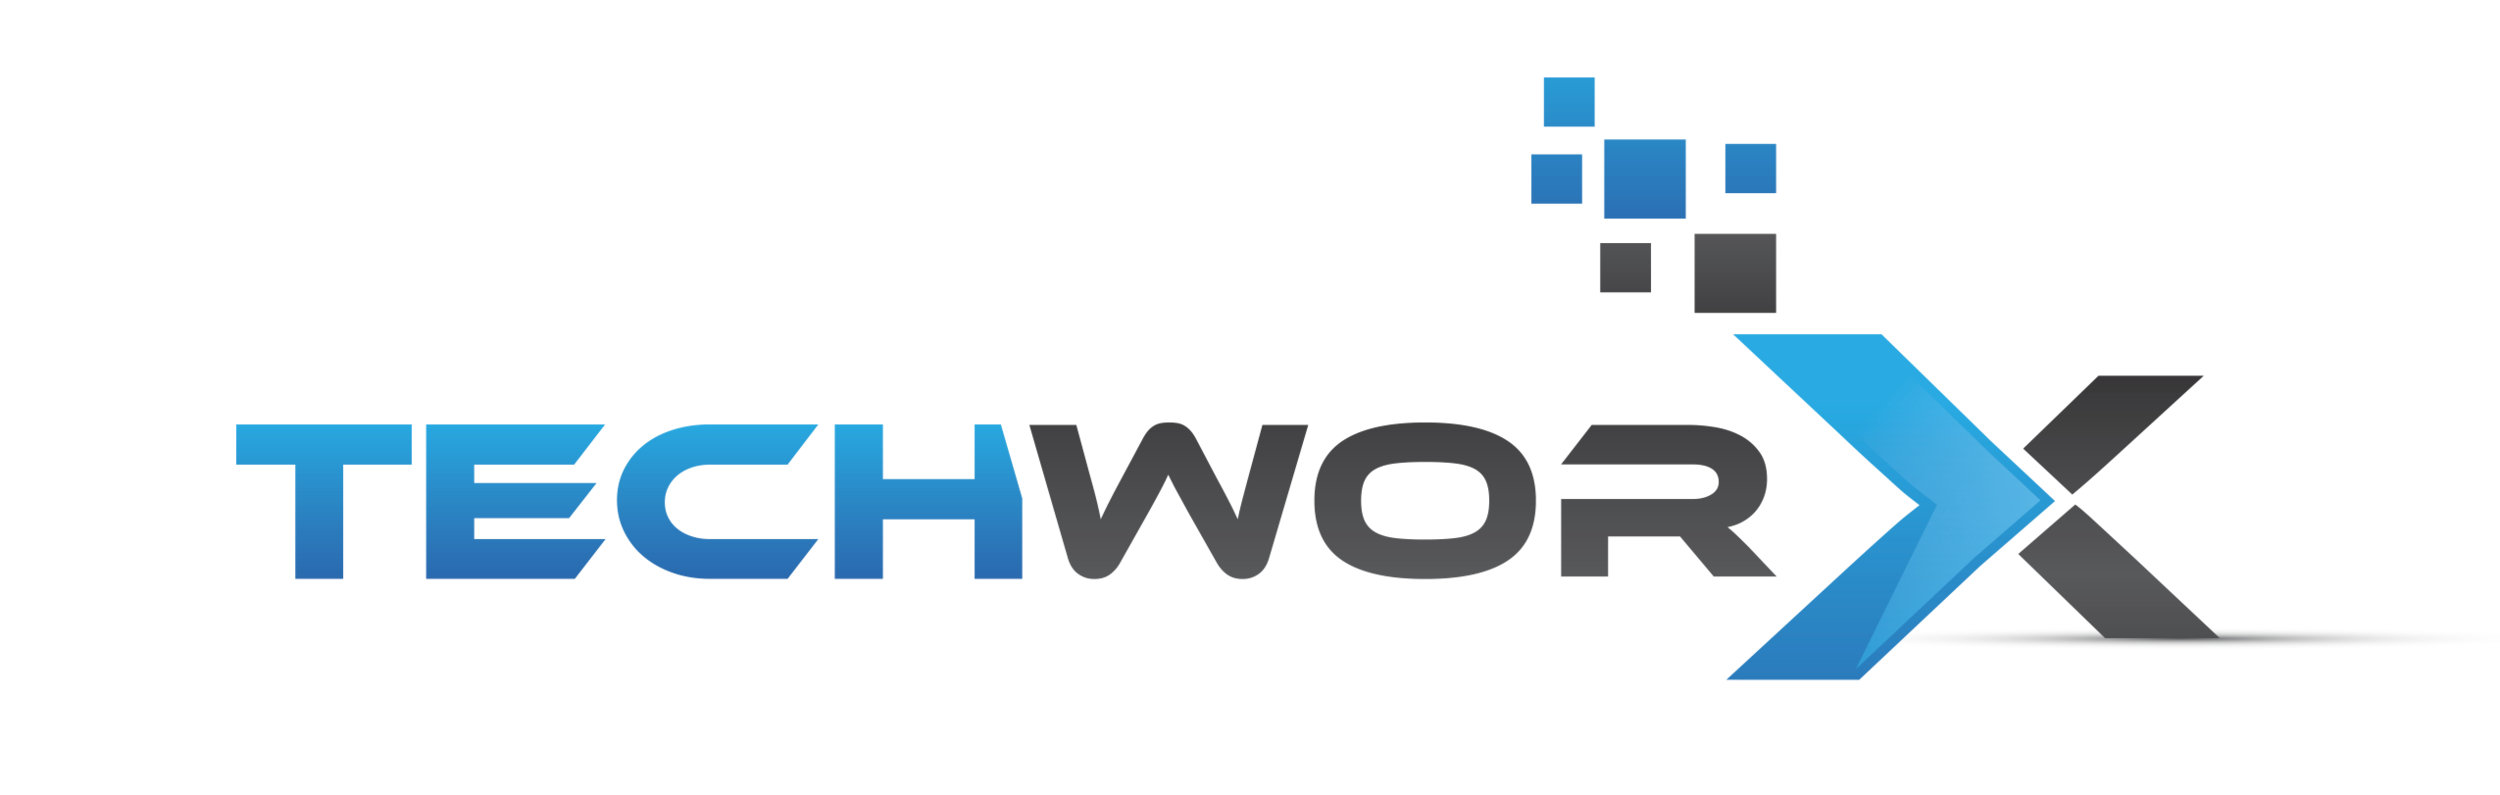 TechWorX---Logo-01.png